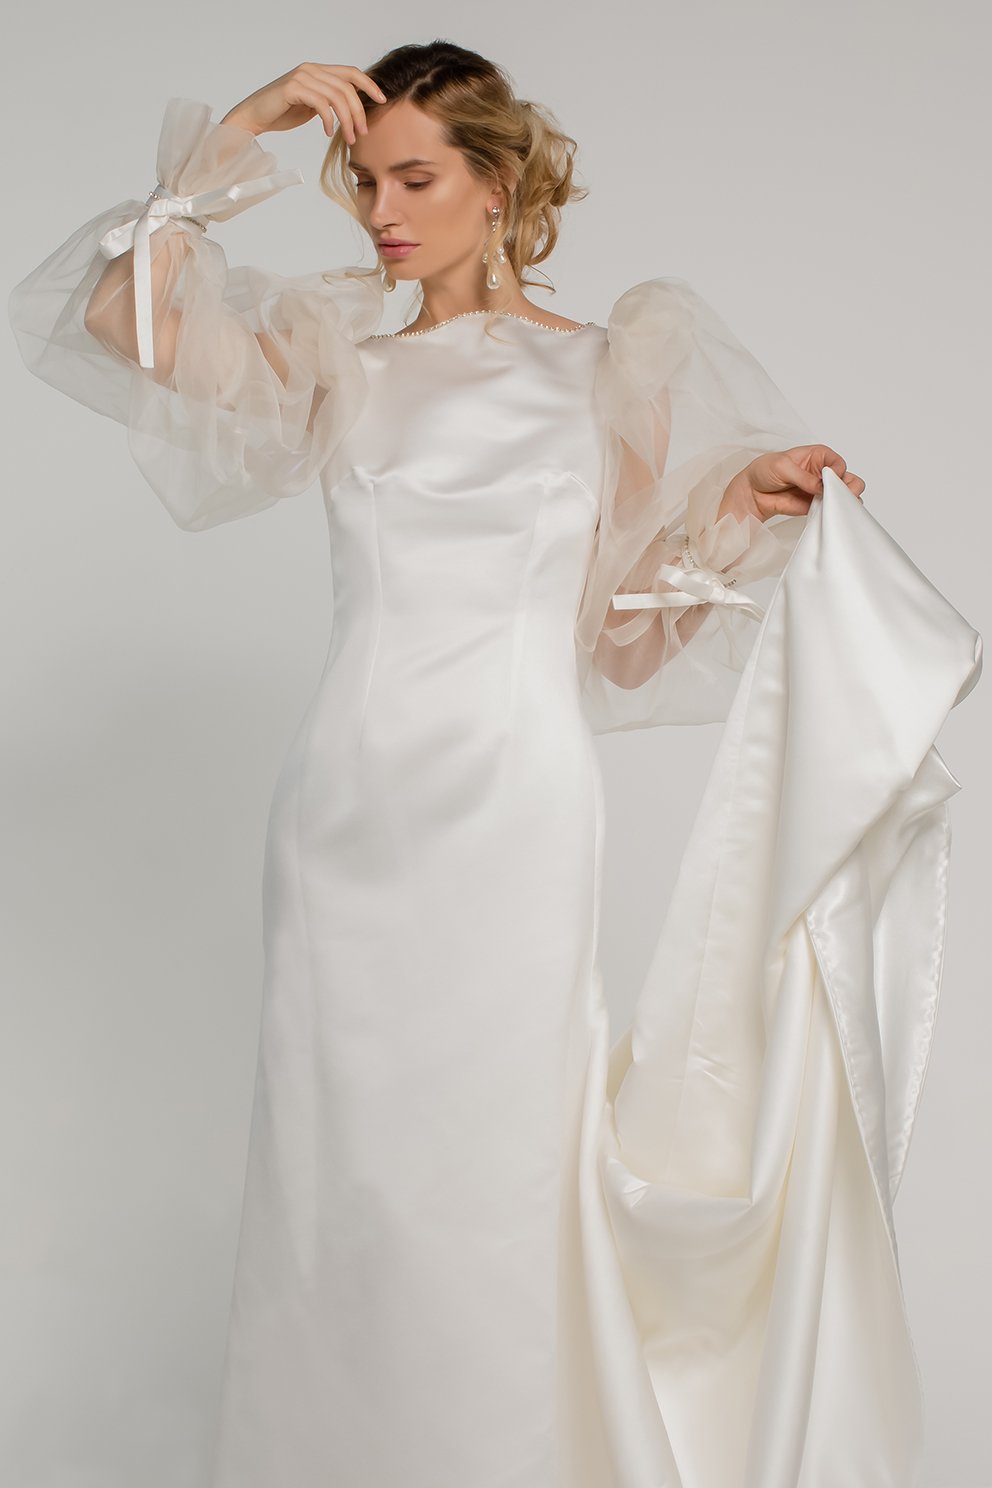 Designer Haute Couture Luxury White Wonders Bridal Gown